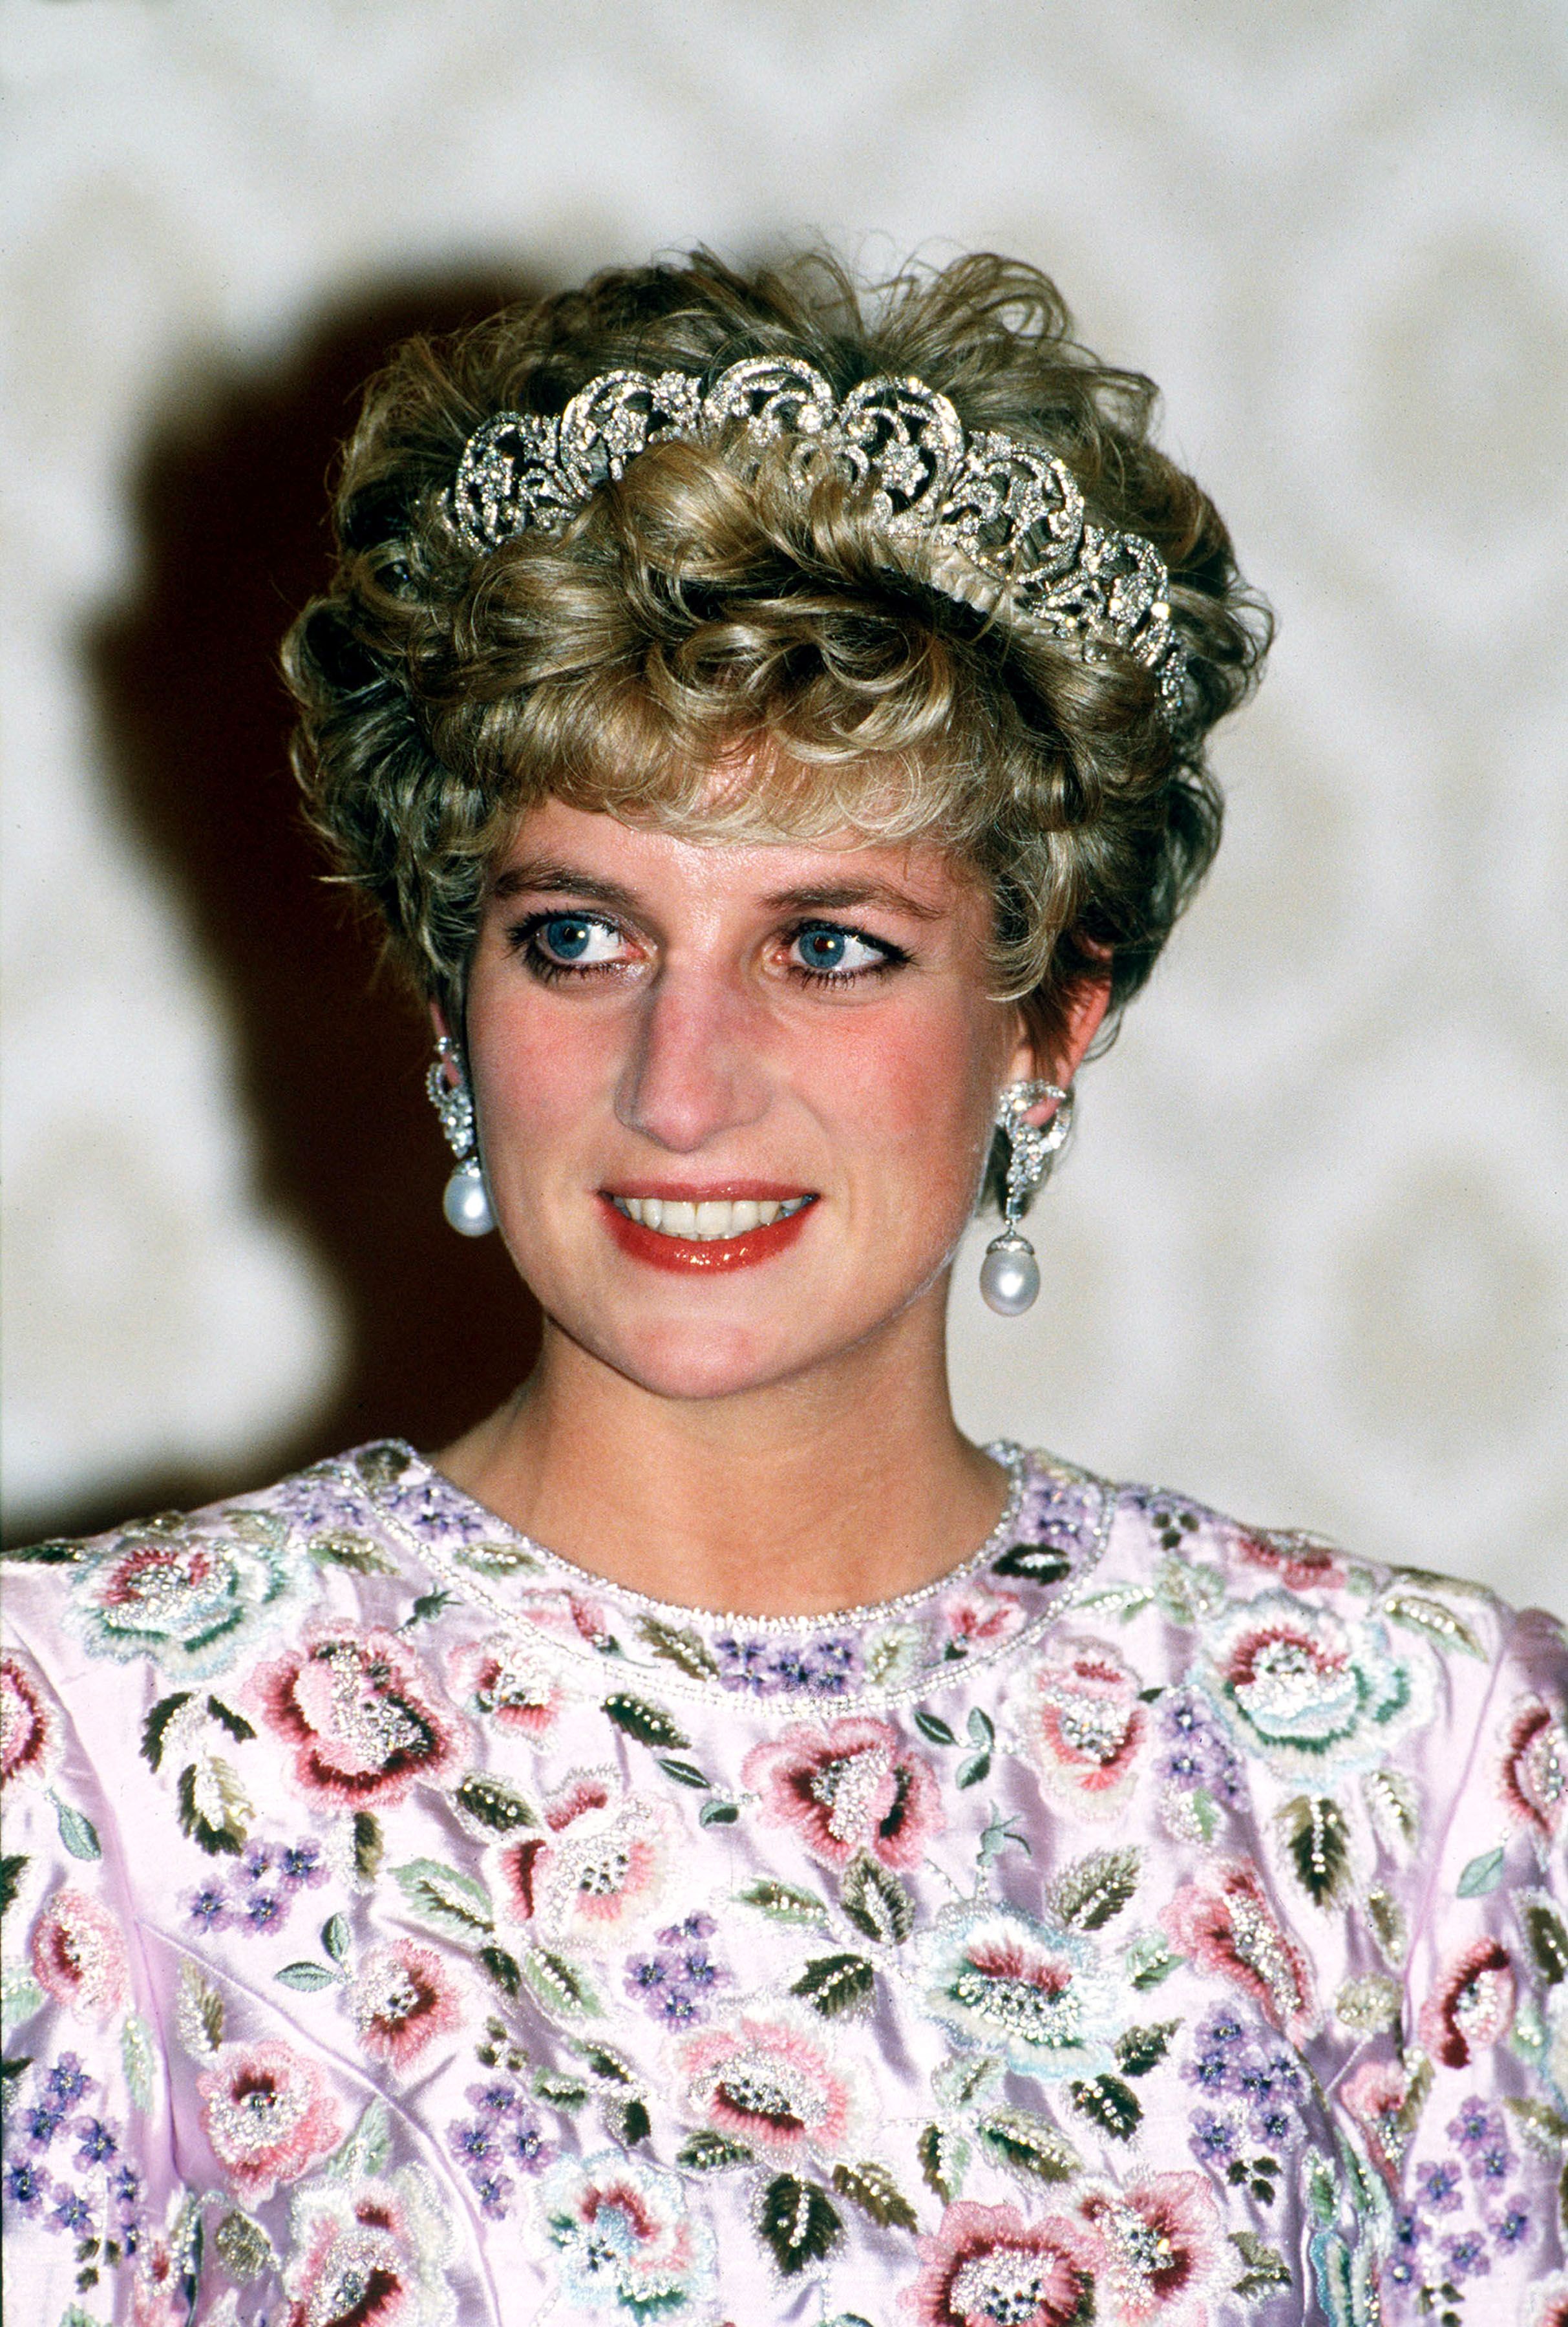 Trading Card Not a Postcard - Princess Diana wearing a Tiara and Earrings 